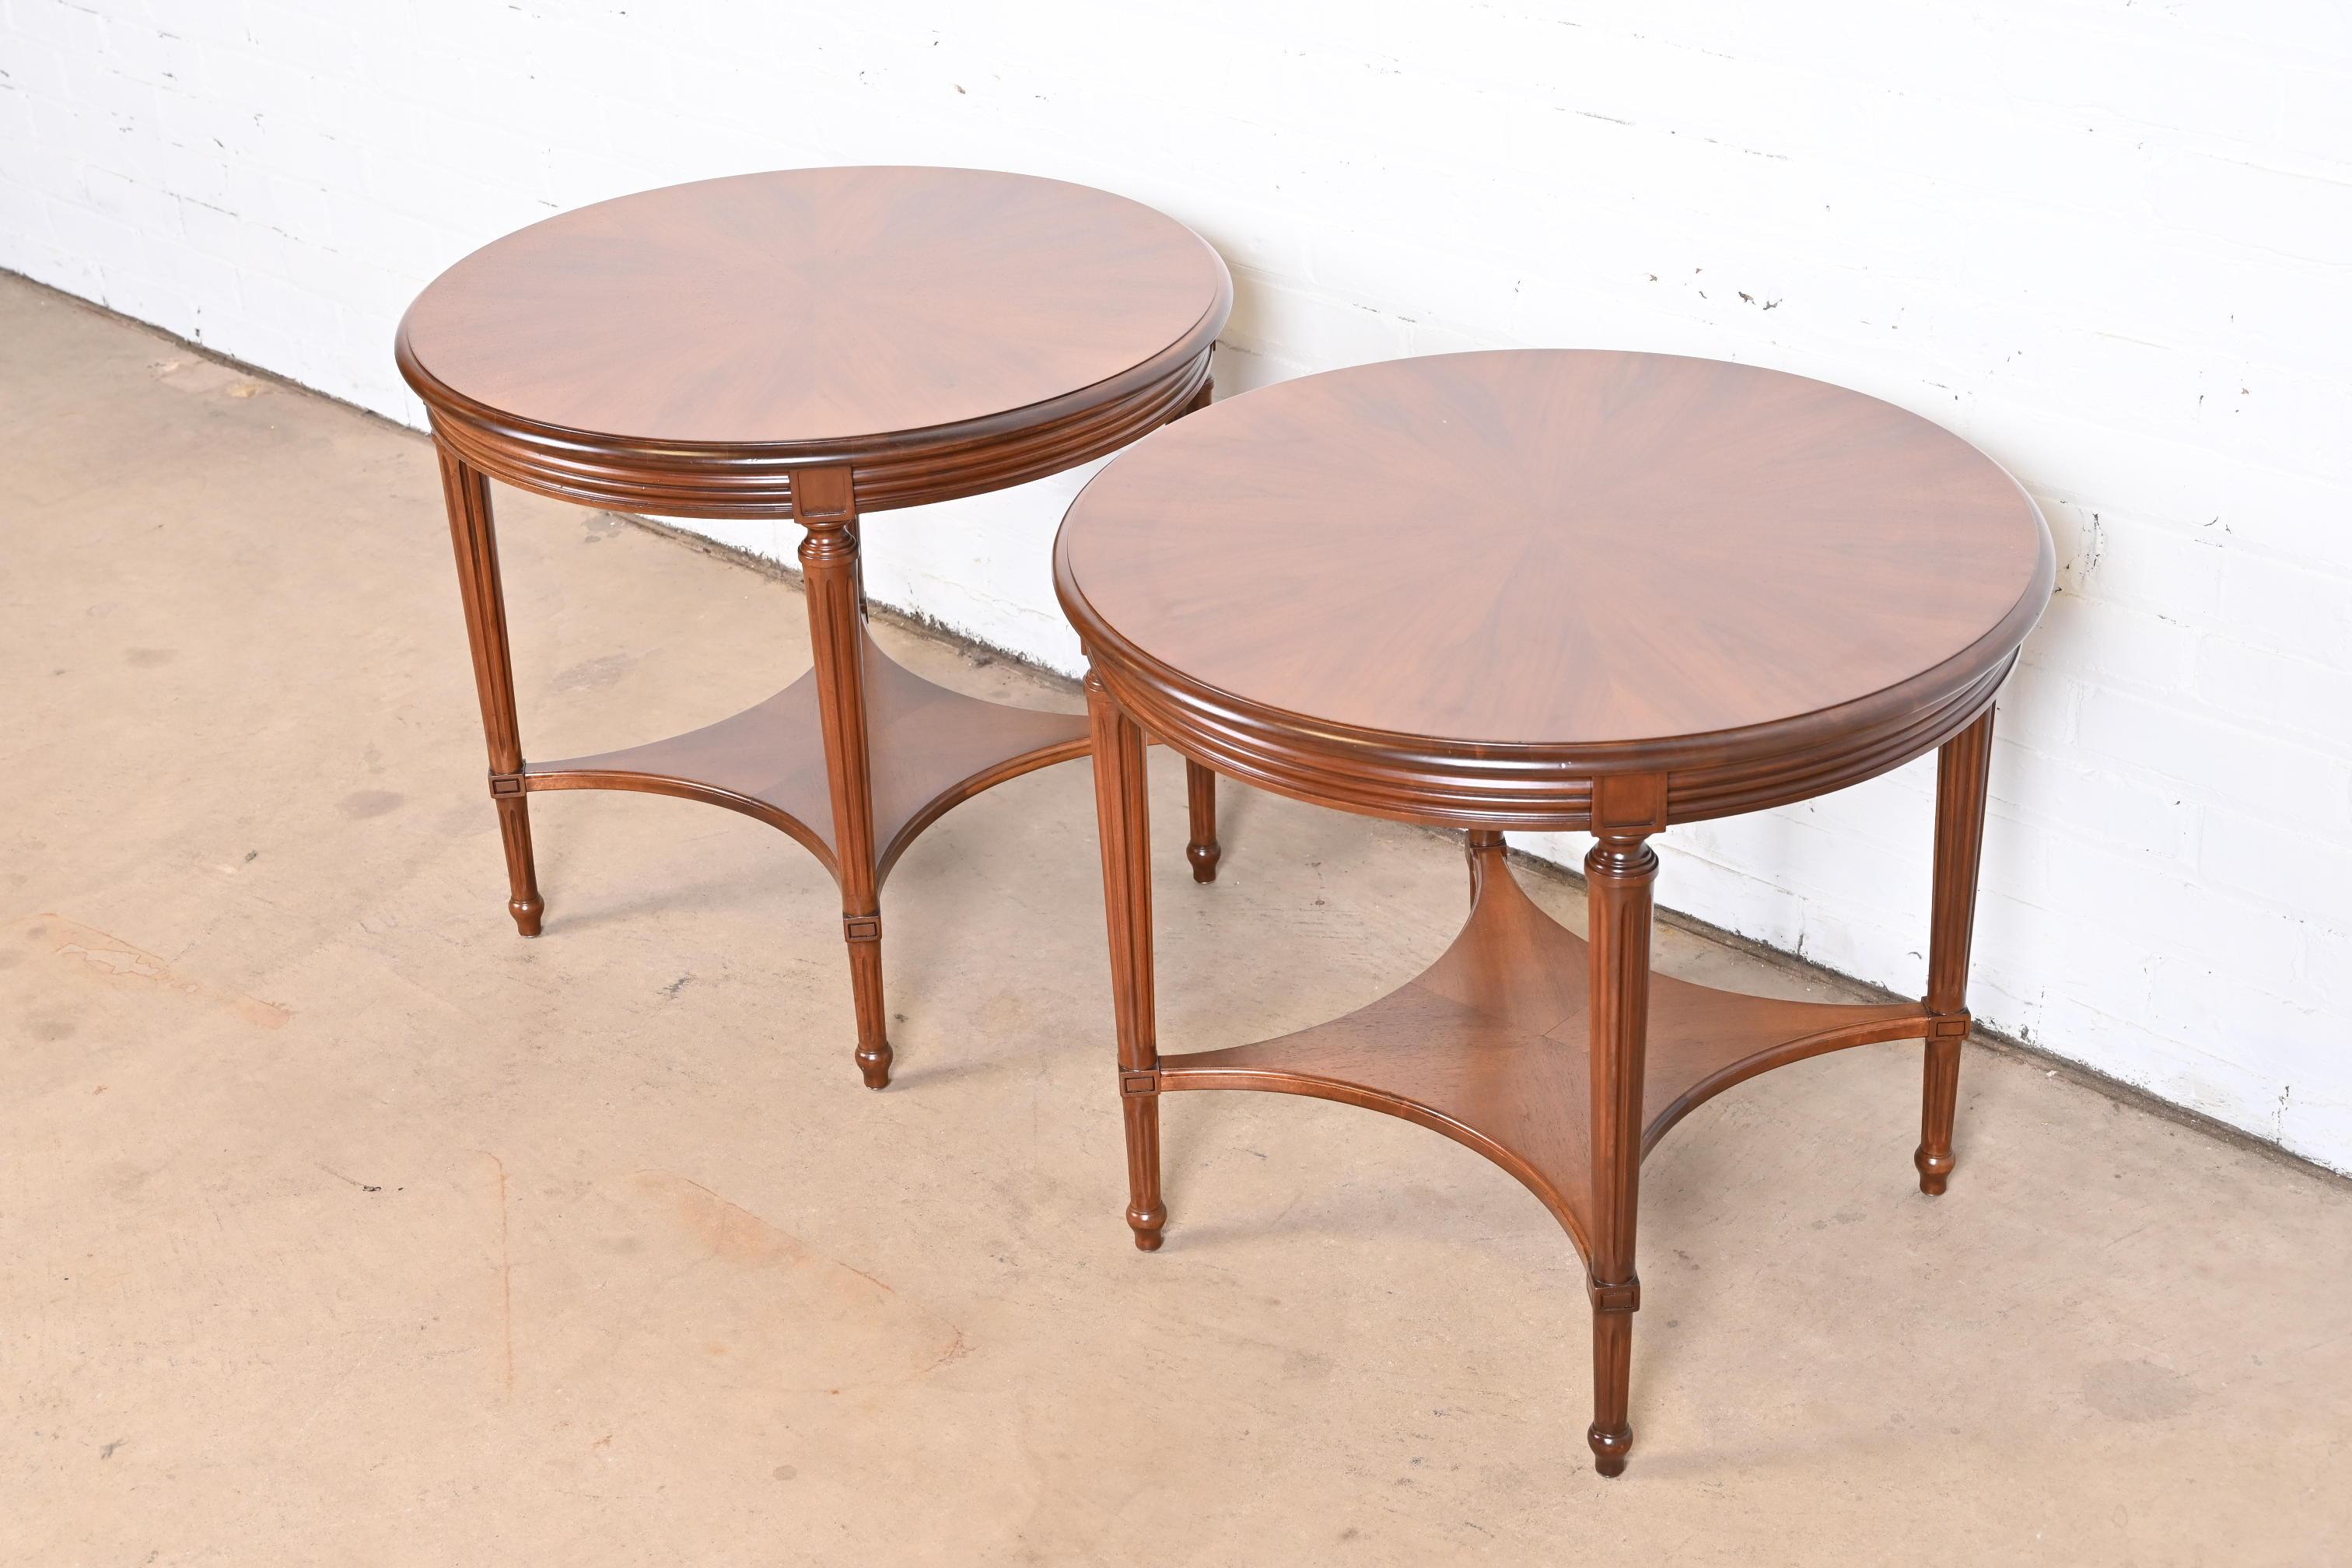 American John Widdicomb French Regency Louis XVI Carved Walnut Side Tables, Refinished